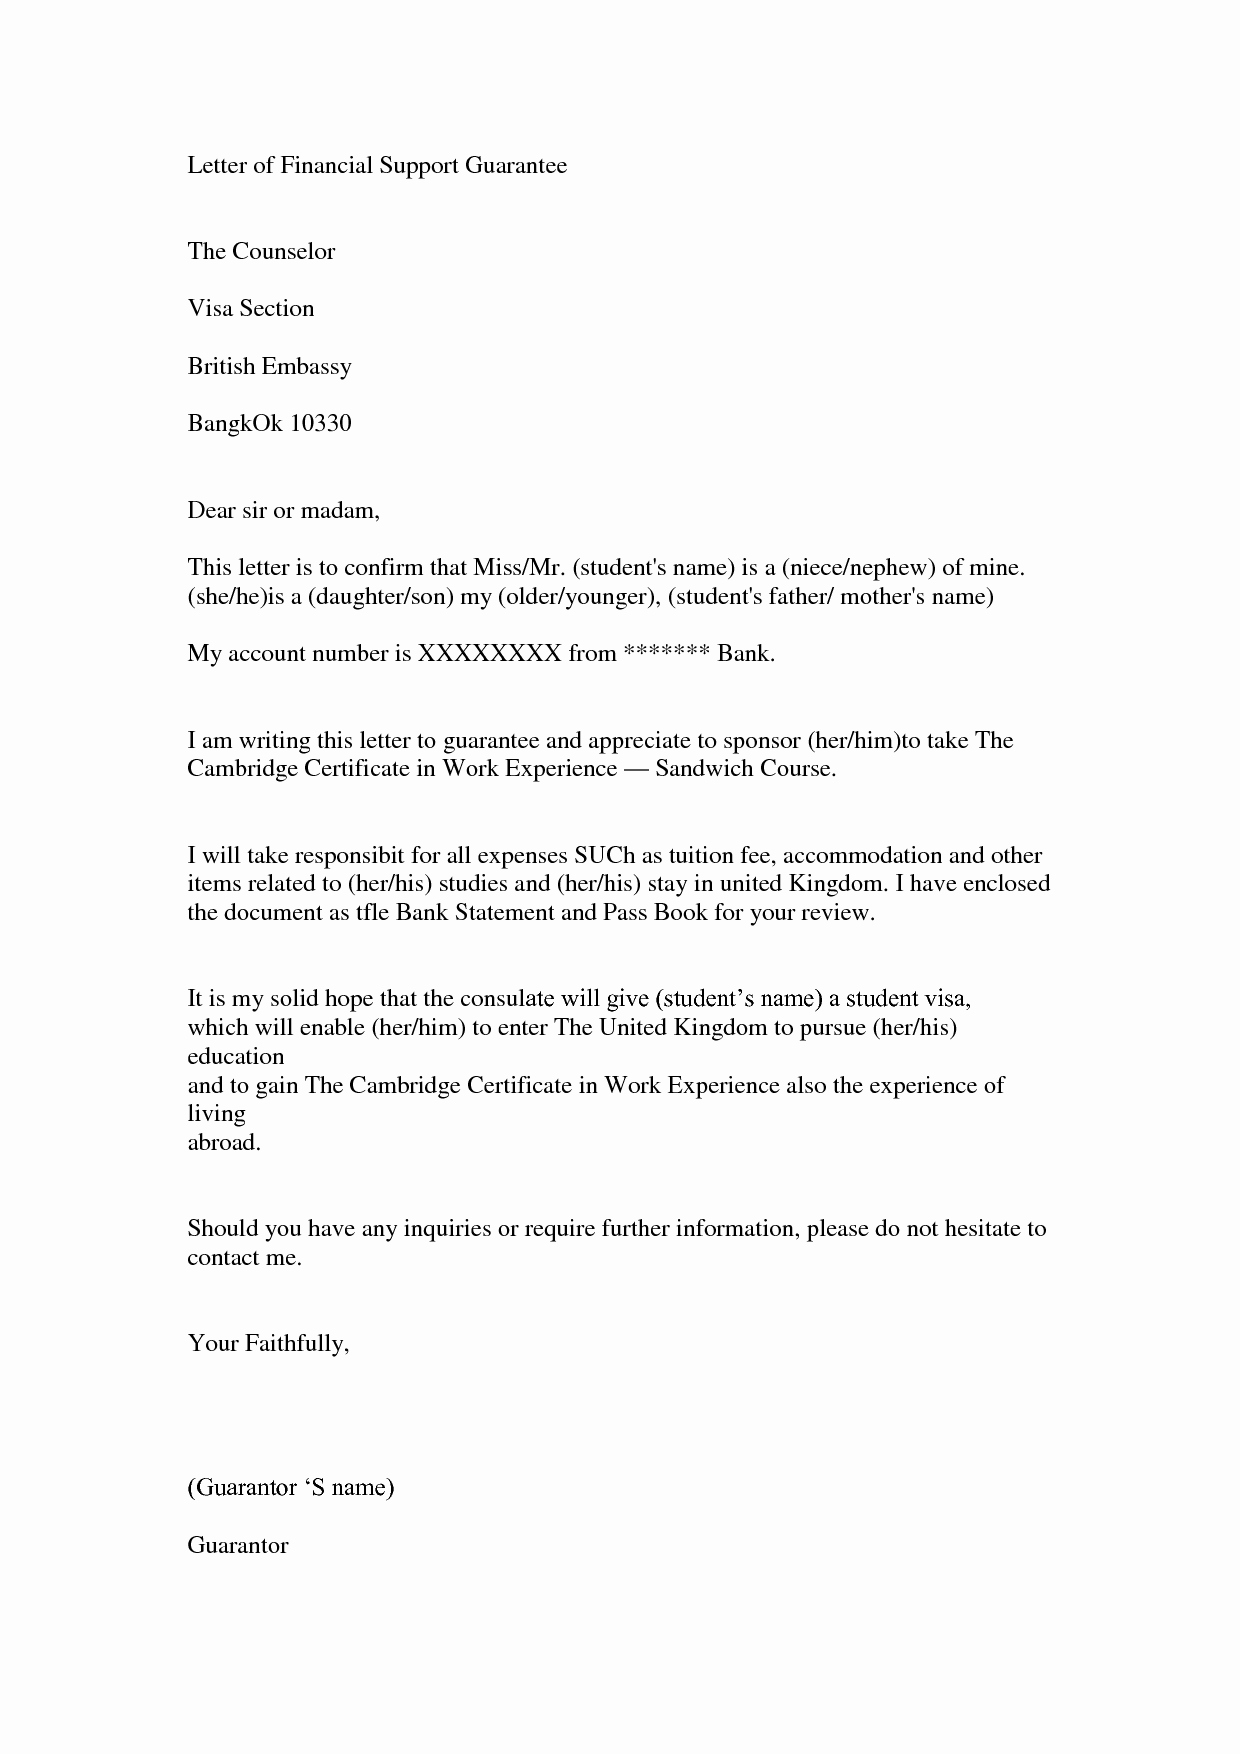 Affidavit Of Support Letter Fresh Financial Support Letter Image Gallery Nesta